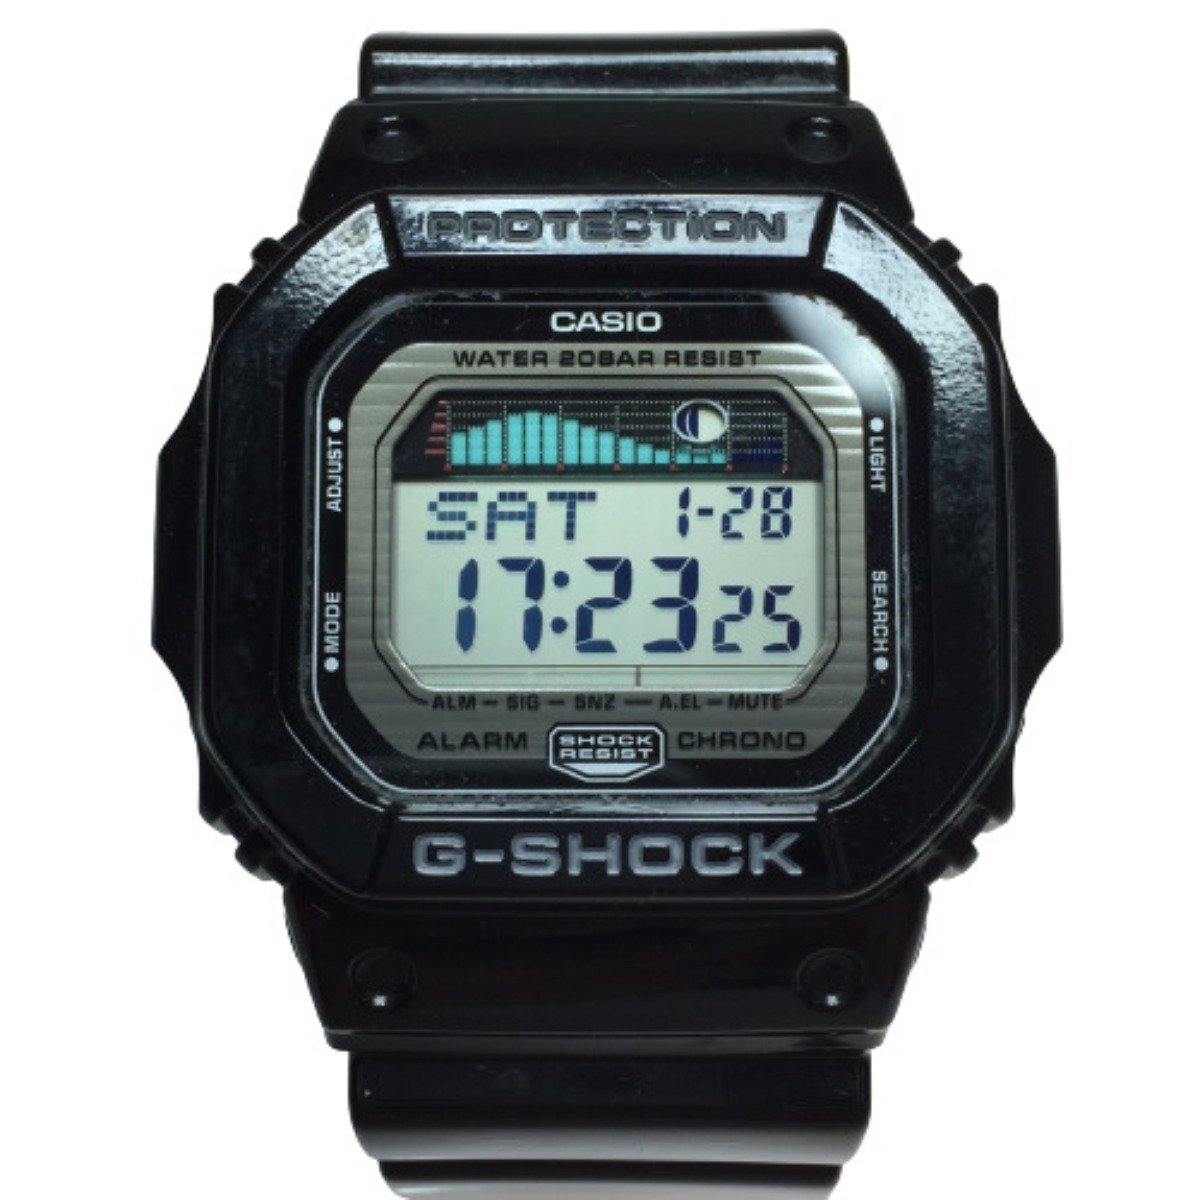 ◎◎ CASIO カシオ G-SHOCK G-LIDE クォーツ メンズ 腕時計 GLX-5600 傷や汚れあり